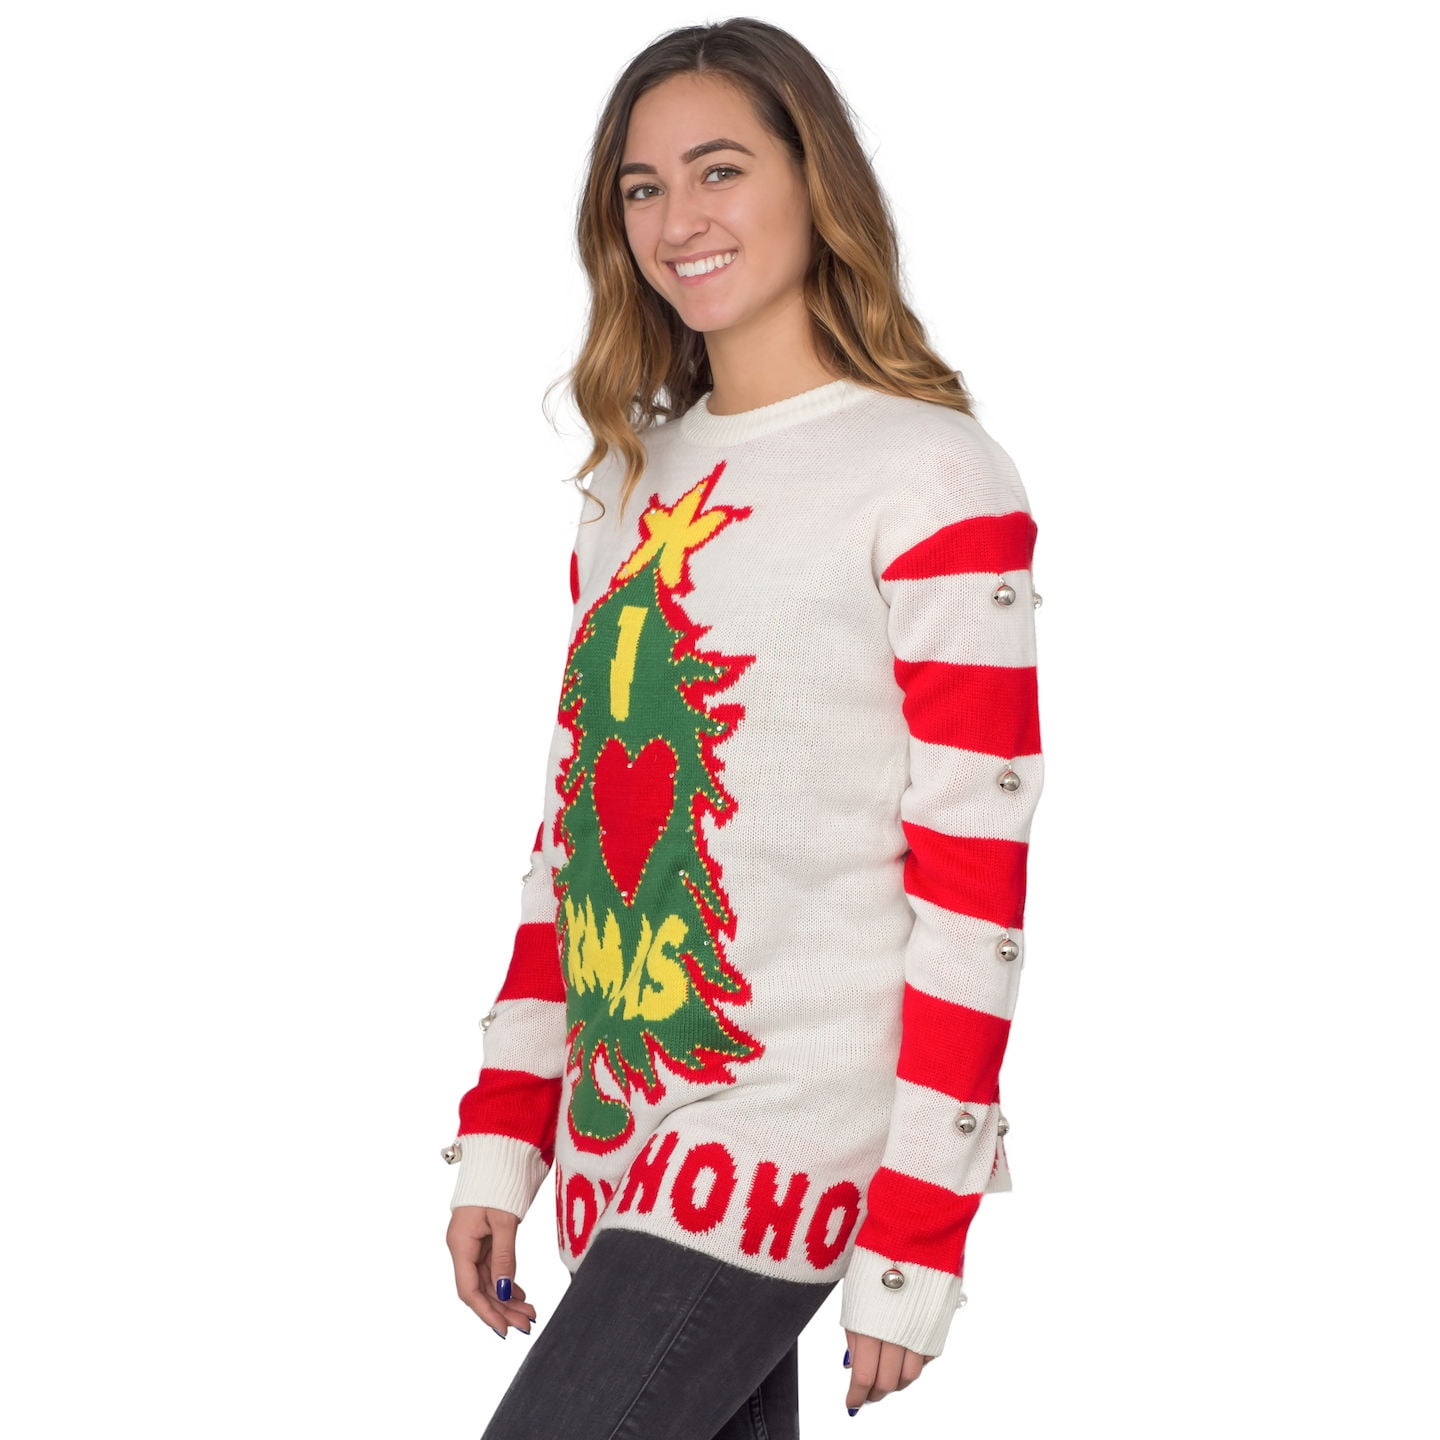 Costume Agent I Love Xmas Hohoho Grinch Light Up (LED) Christmas Tree and Star Ugly Christmas Sweater - XL